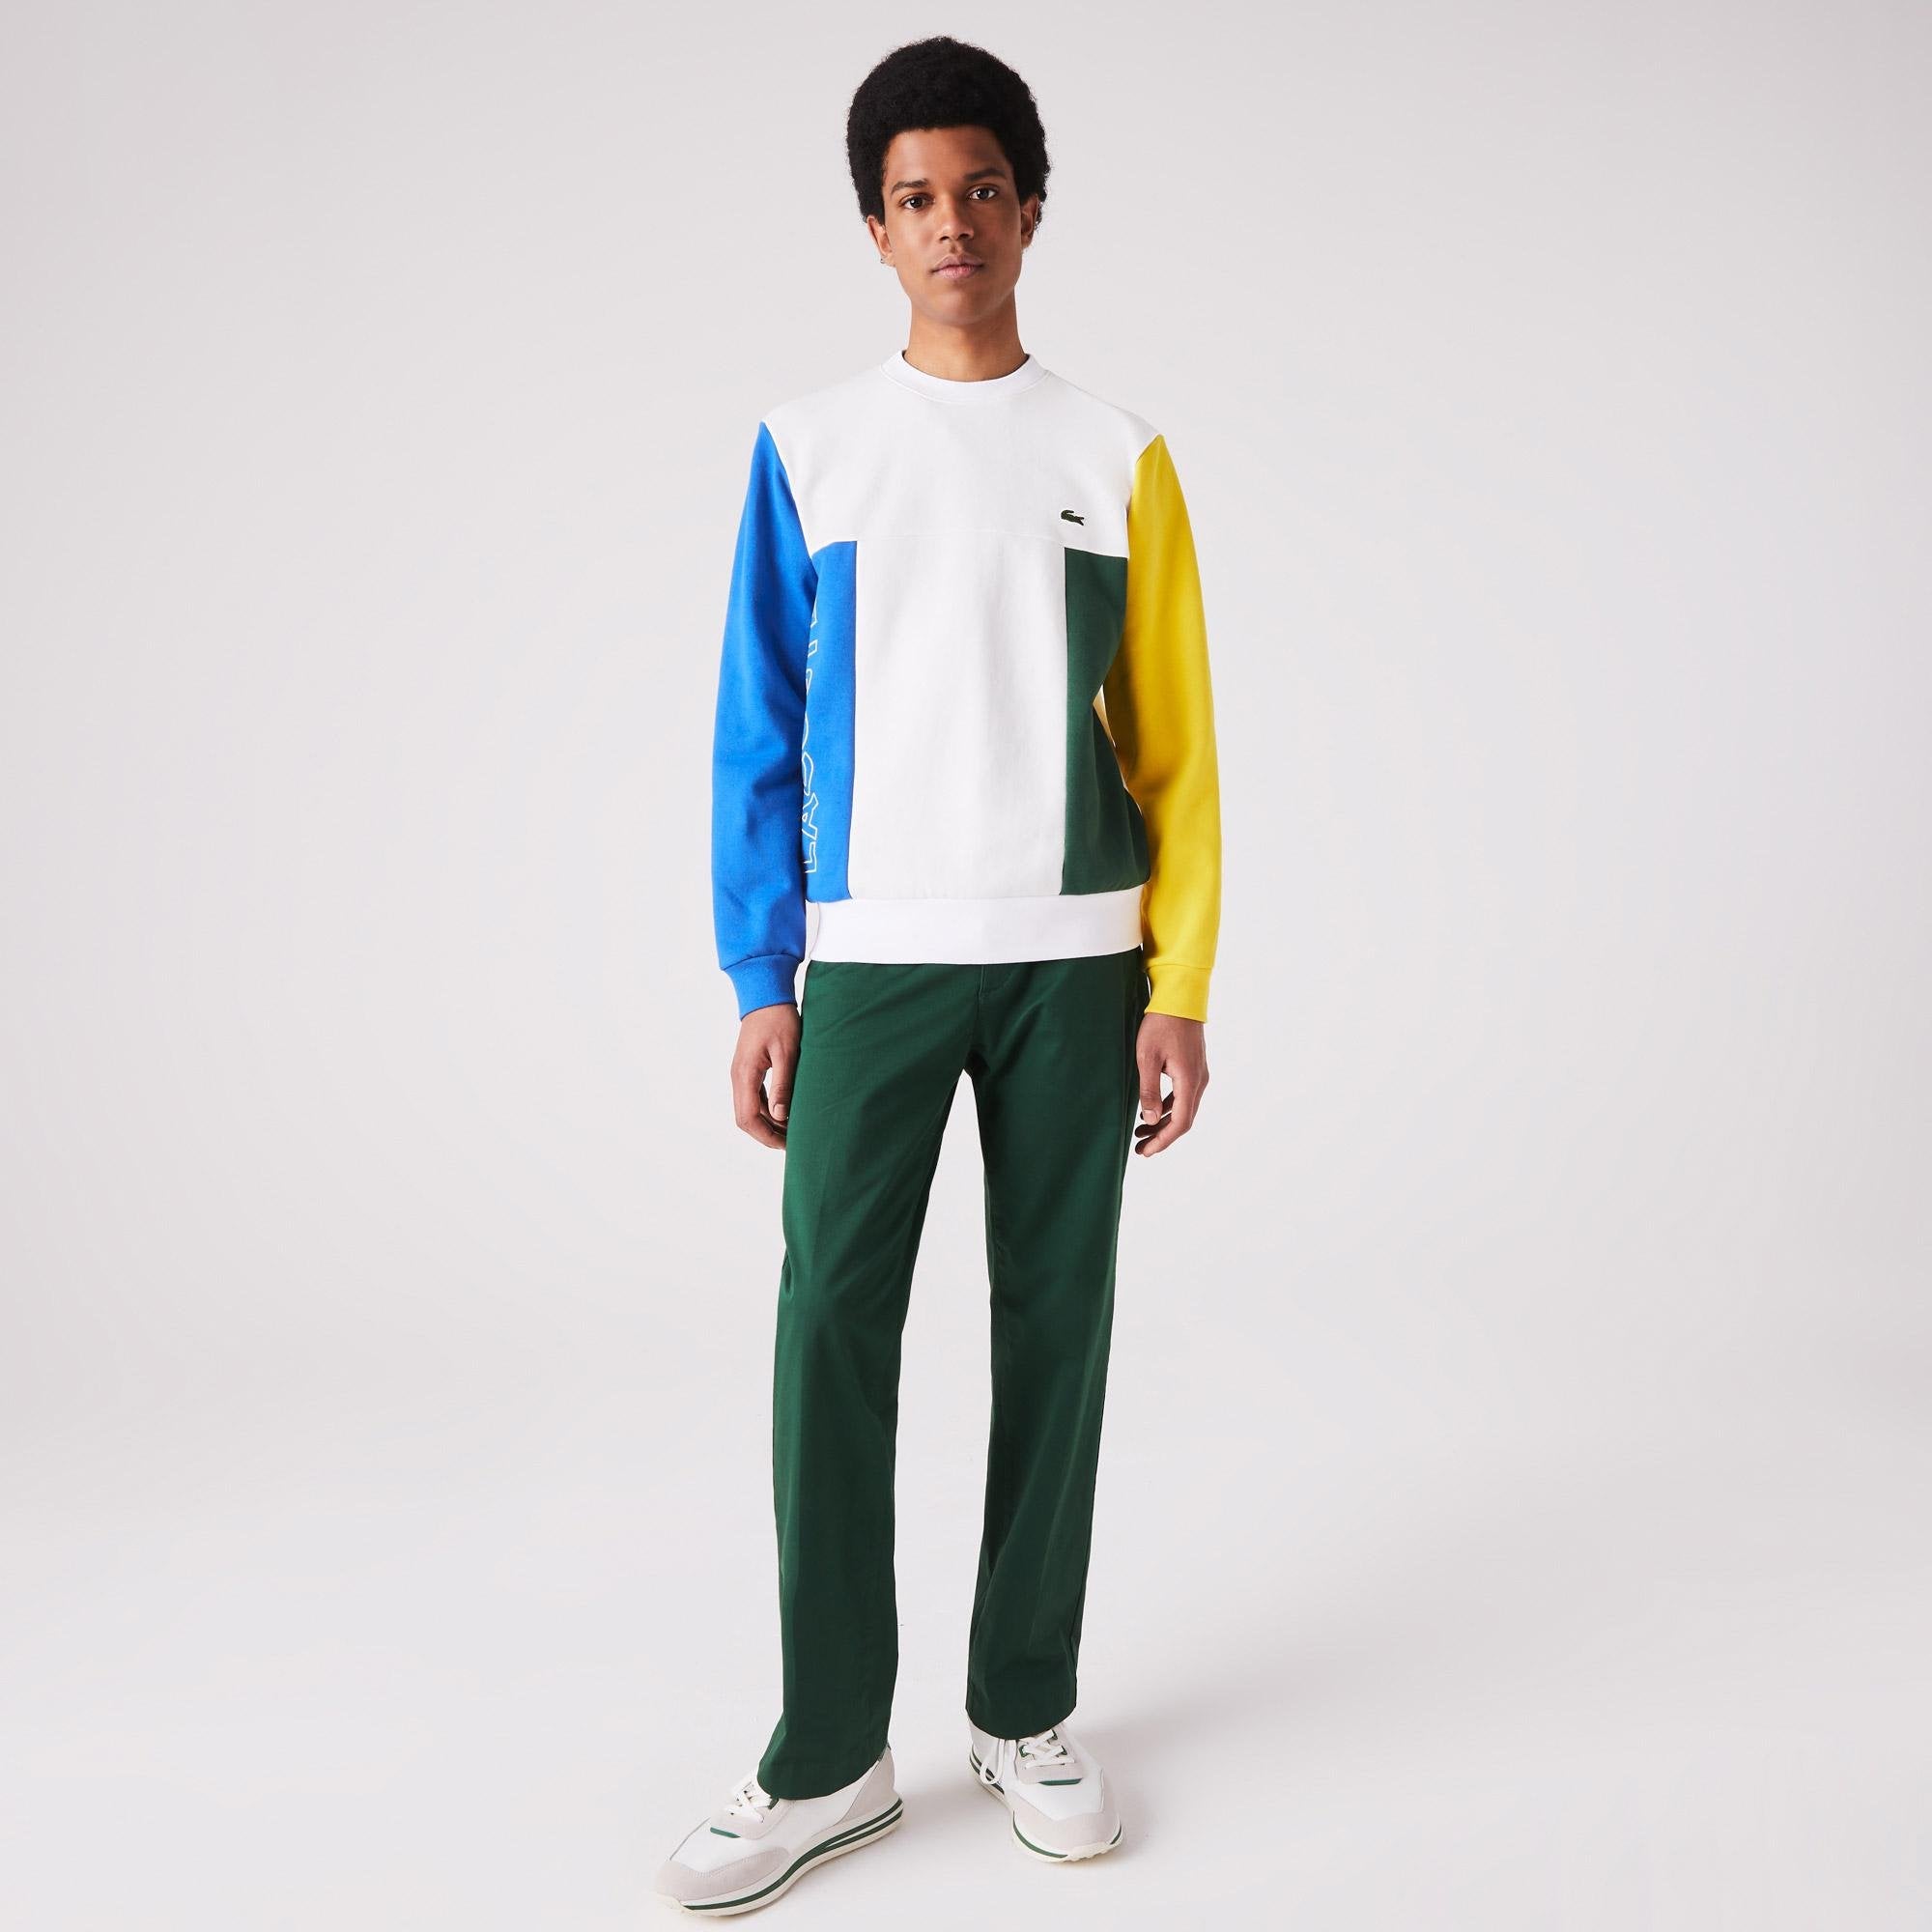 Lacoste - Colour-Block Cotton Fleece Sweatshirt - White/Blue/Yellow